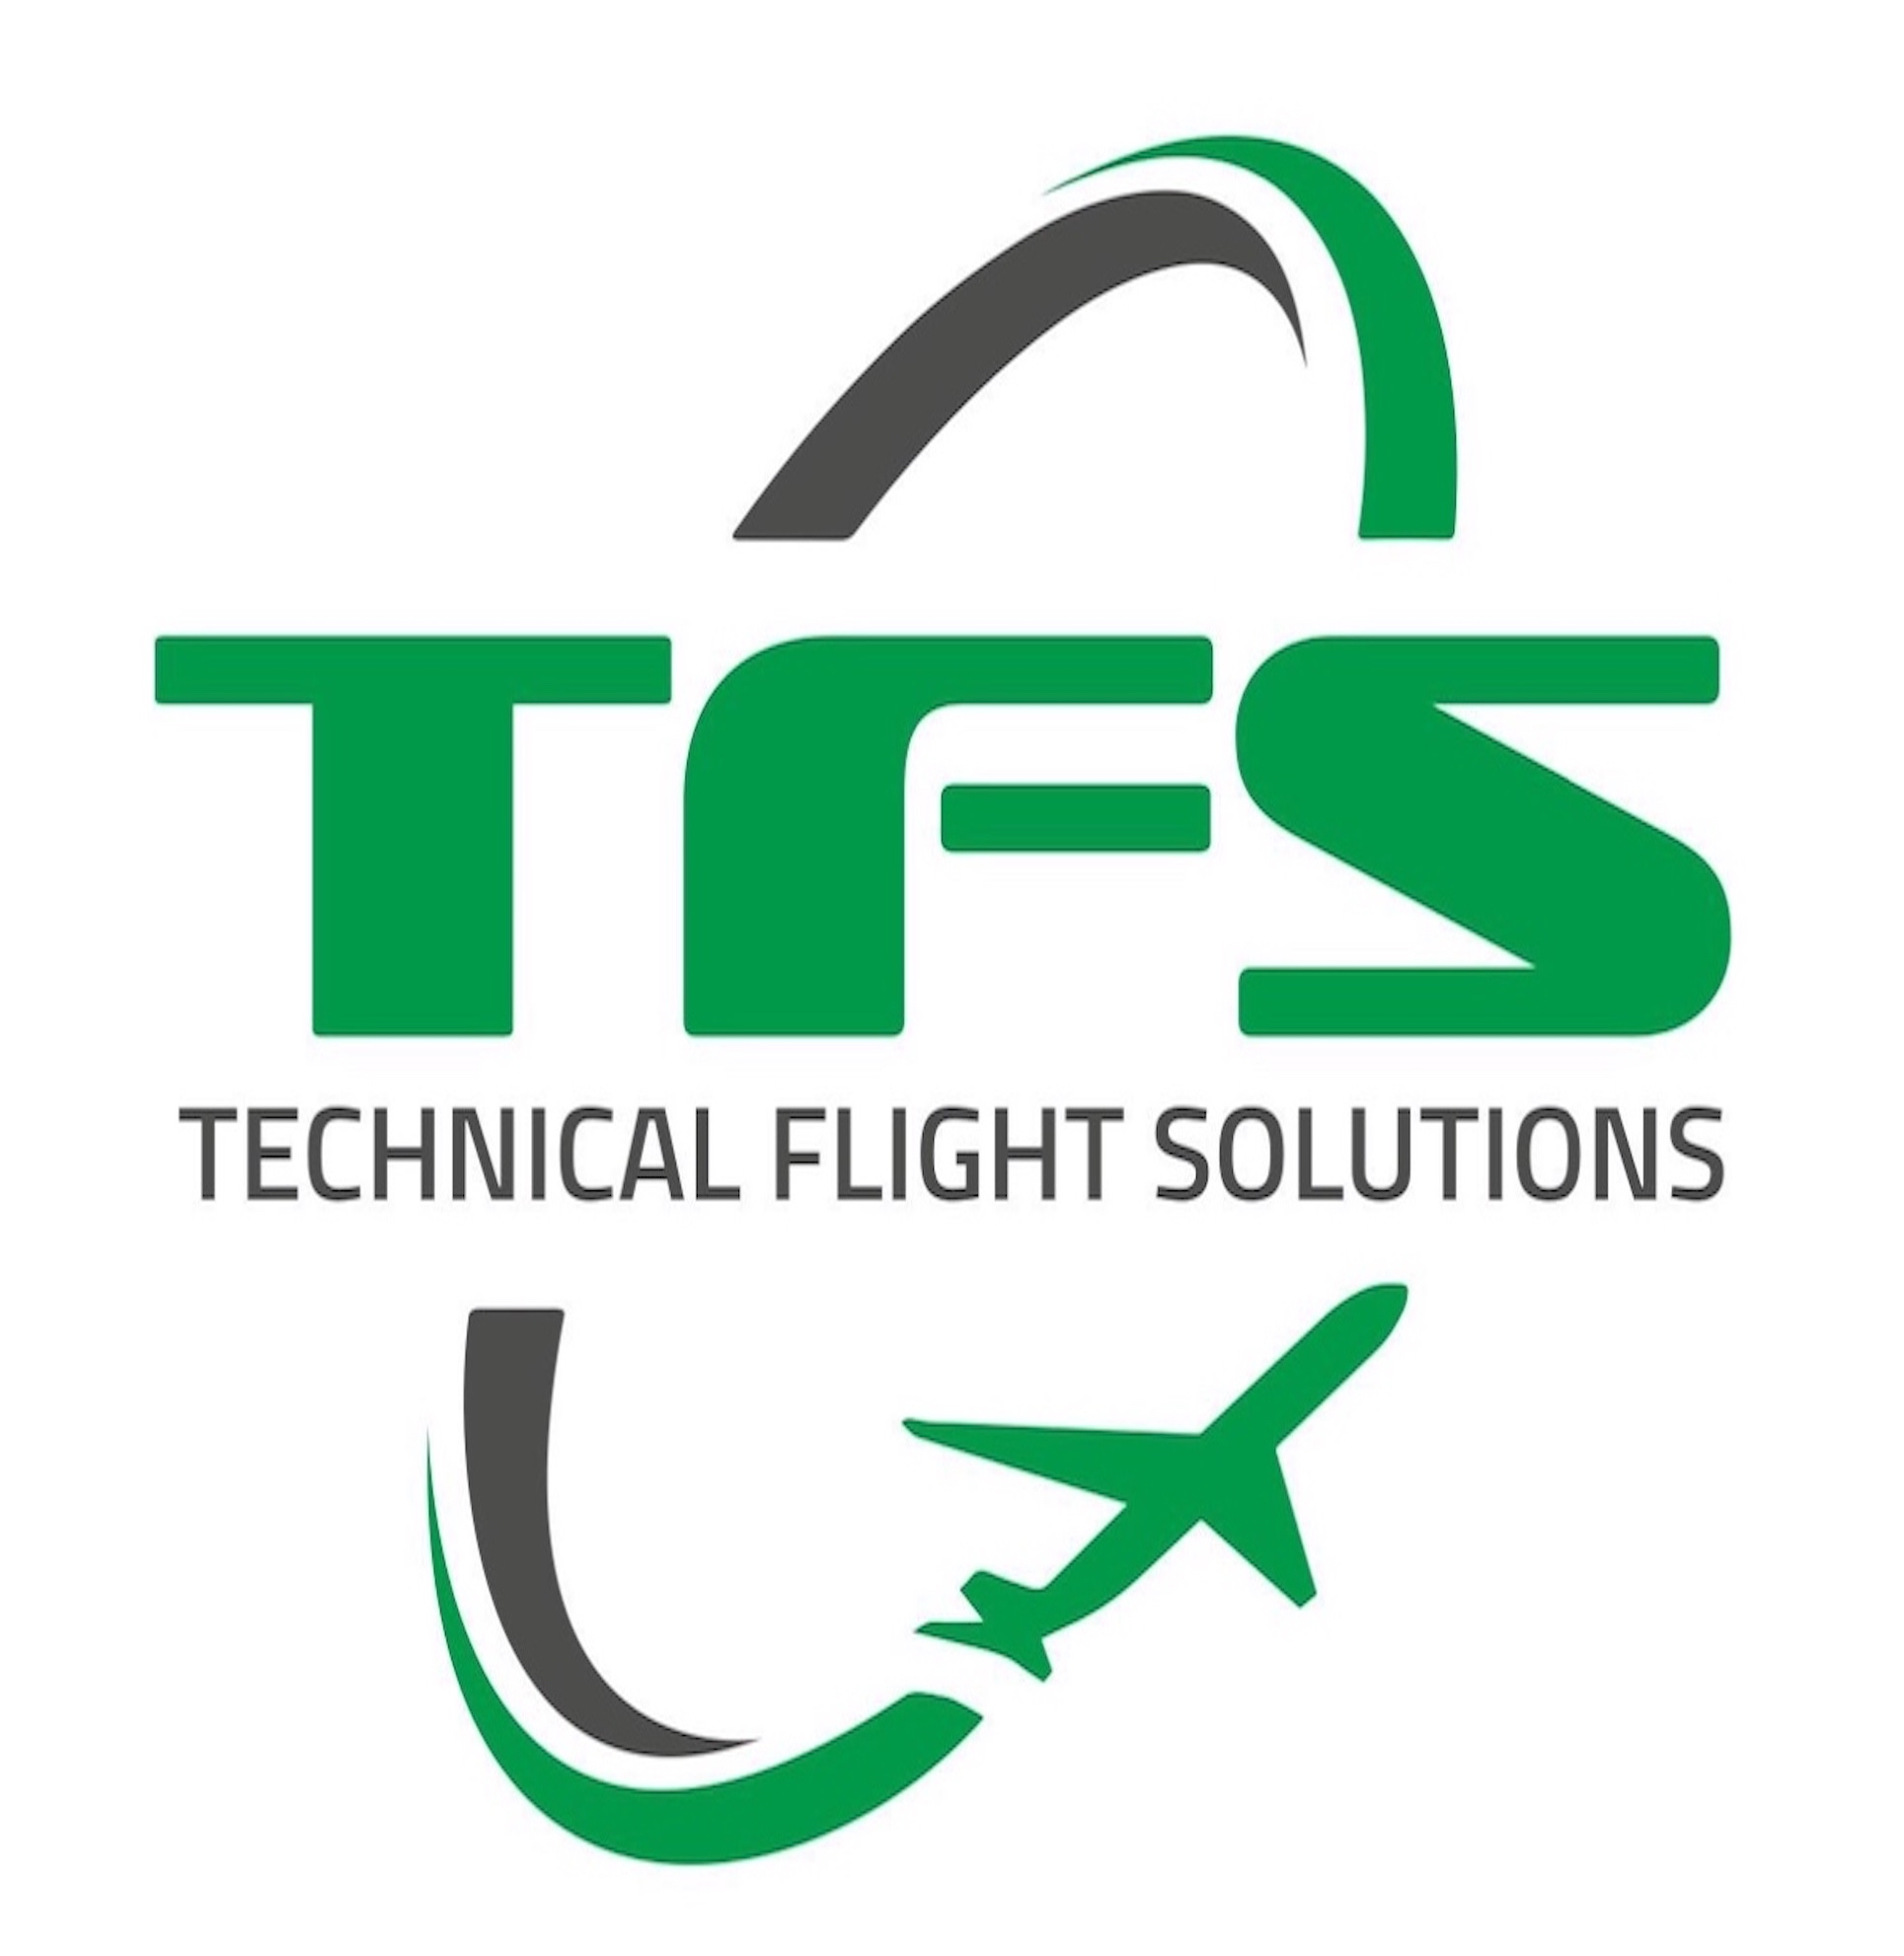 Technical Flight Solutions joins STORADIO HF!